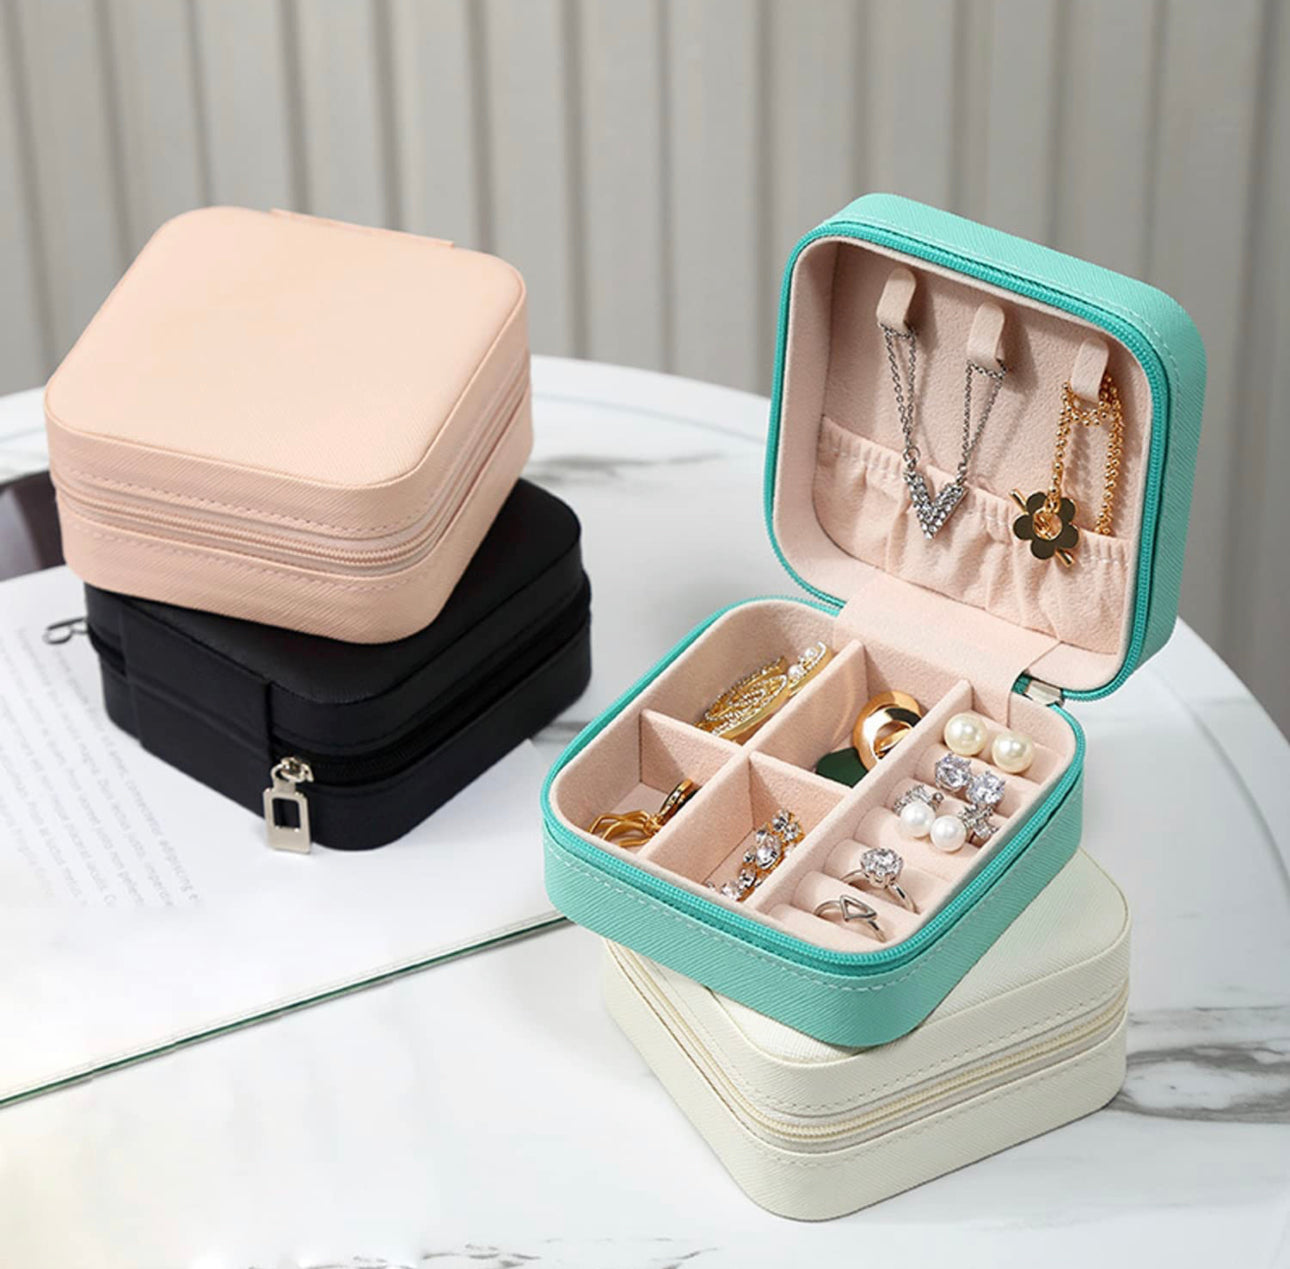 Travel Jewelry Case, Custom Jewelry Bag